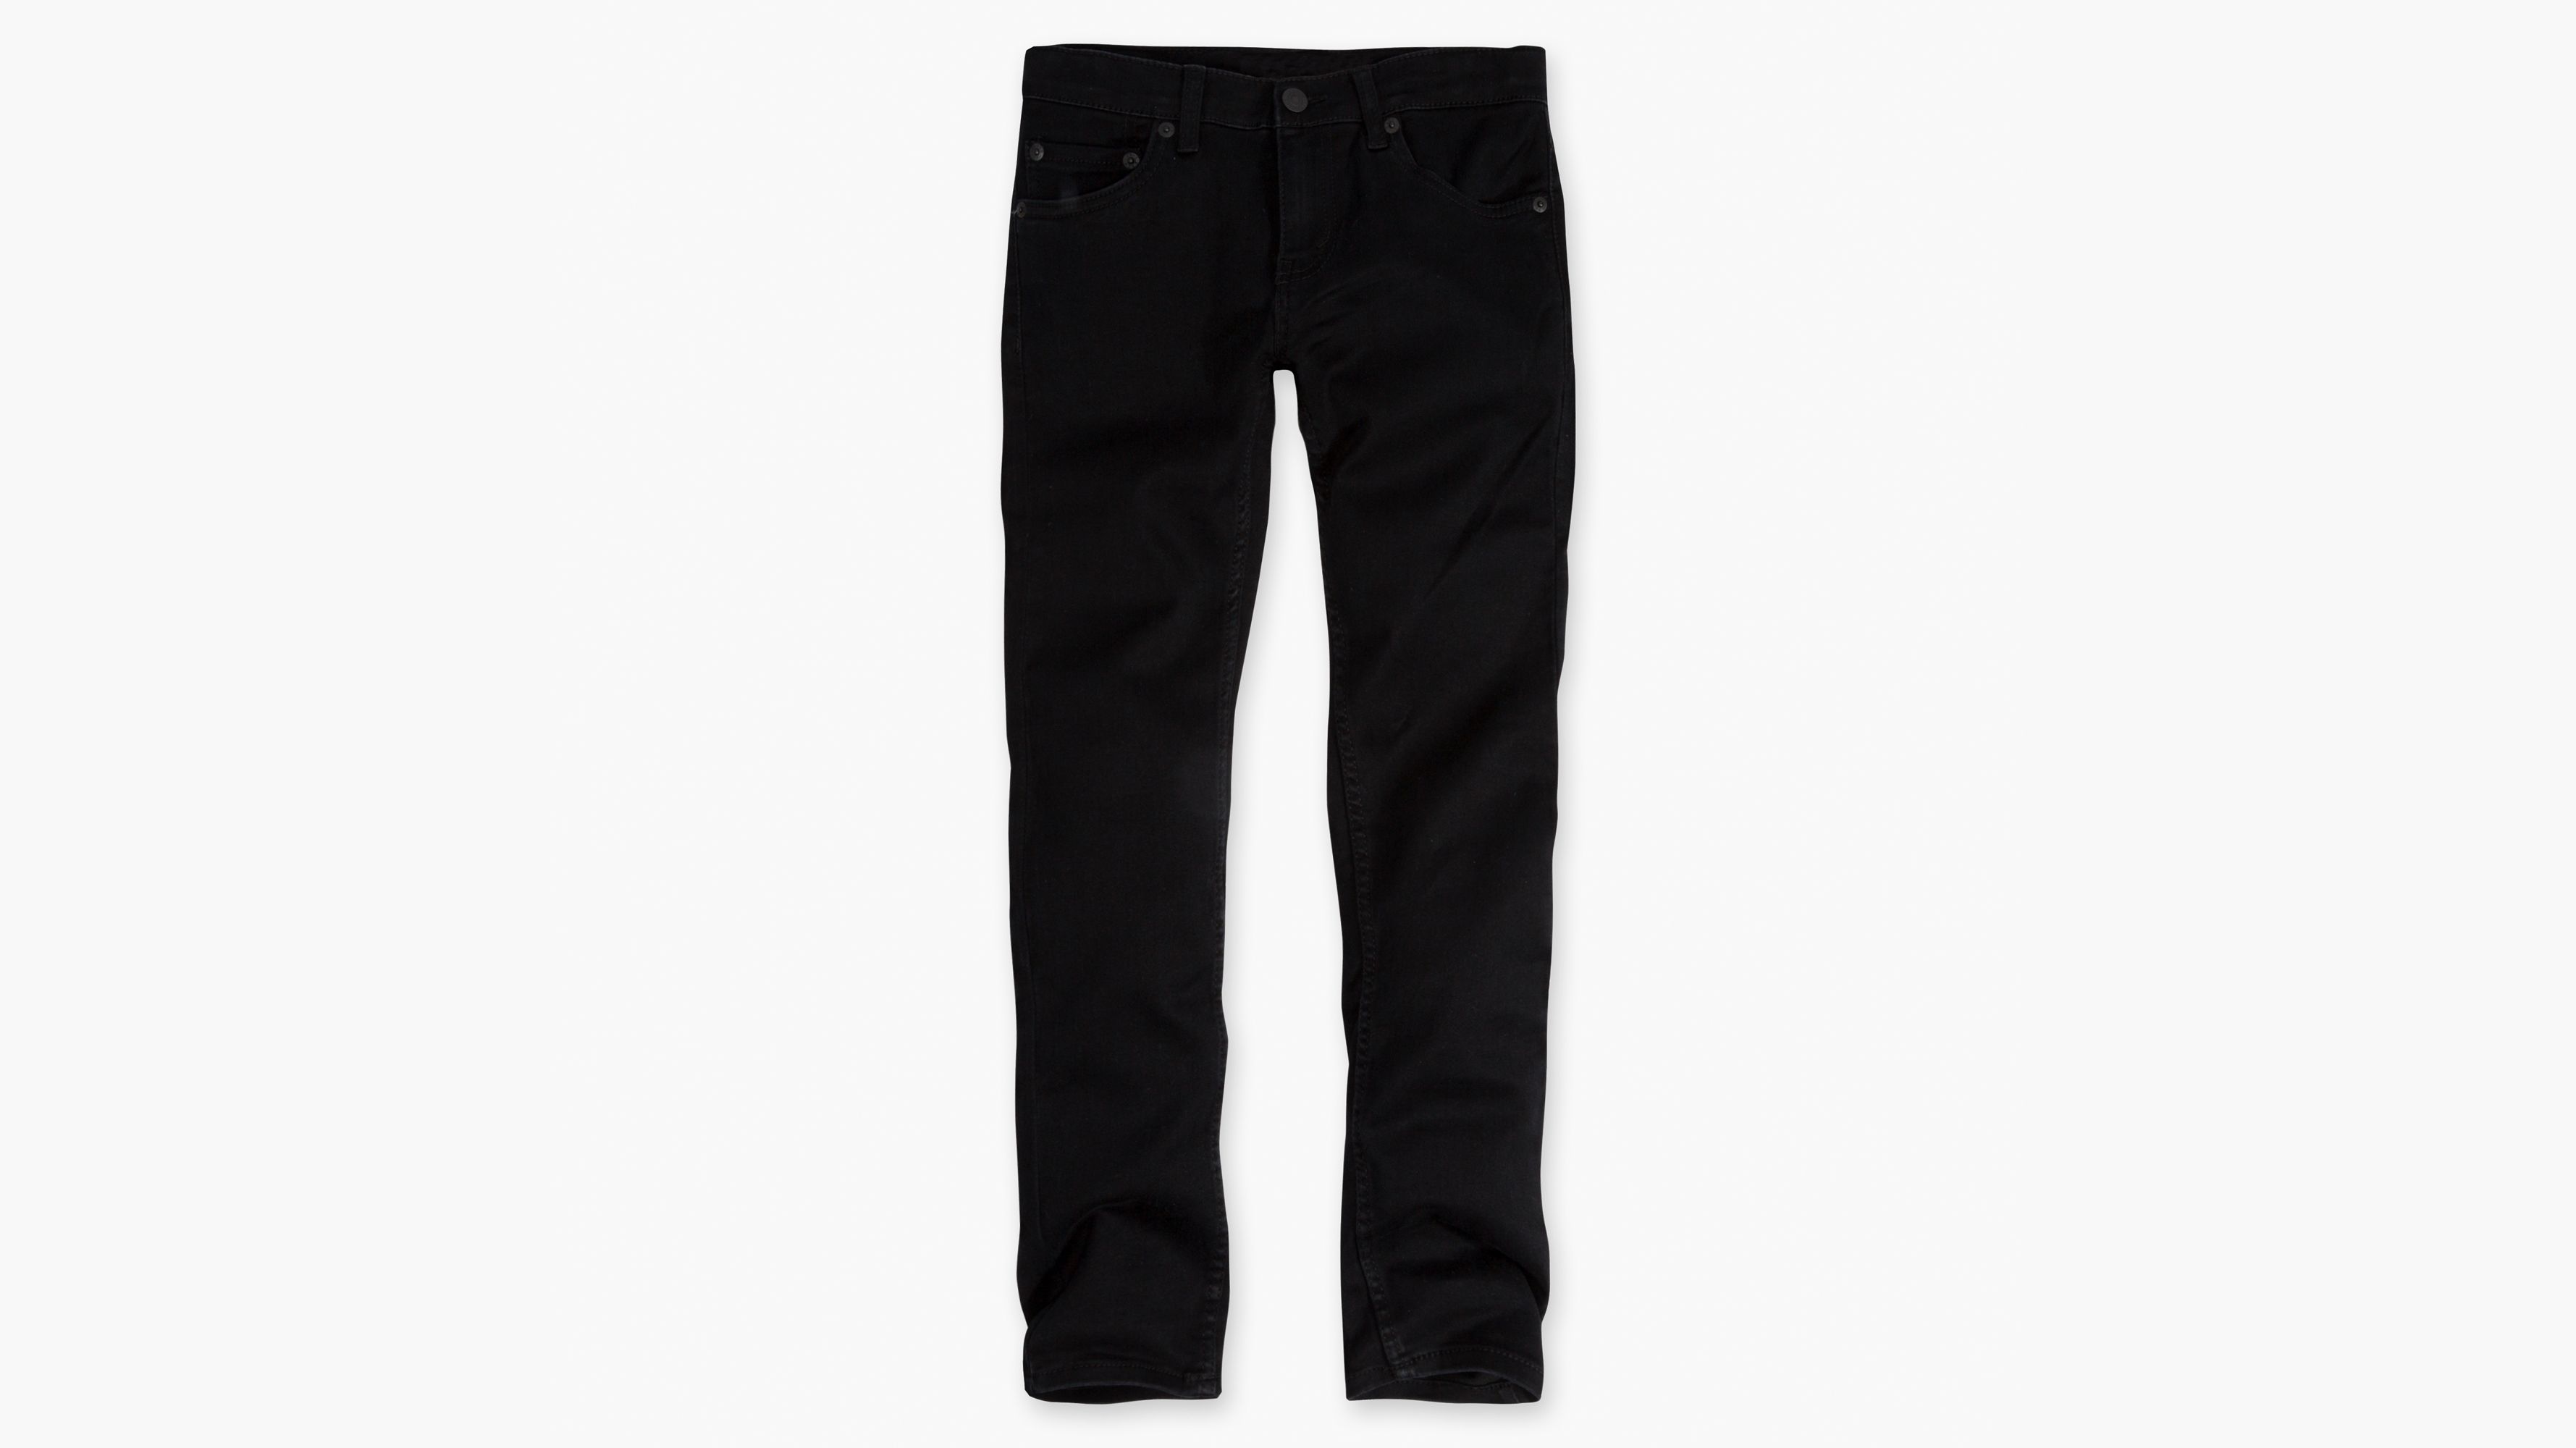 levis 519 black extreme skinny jeans